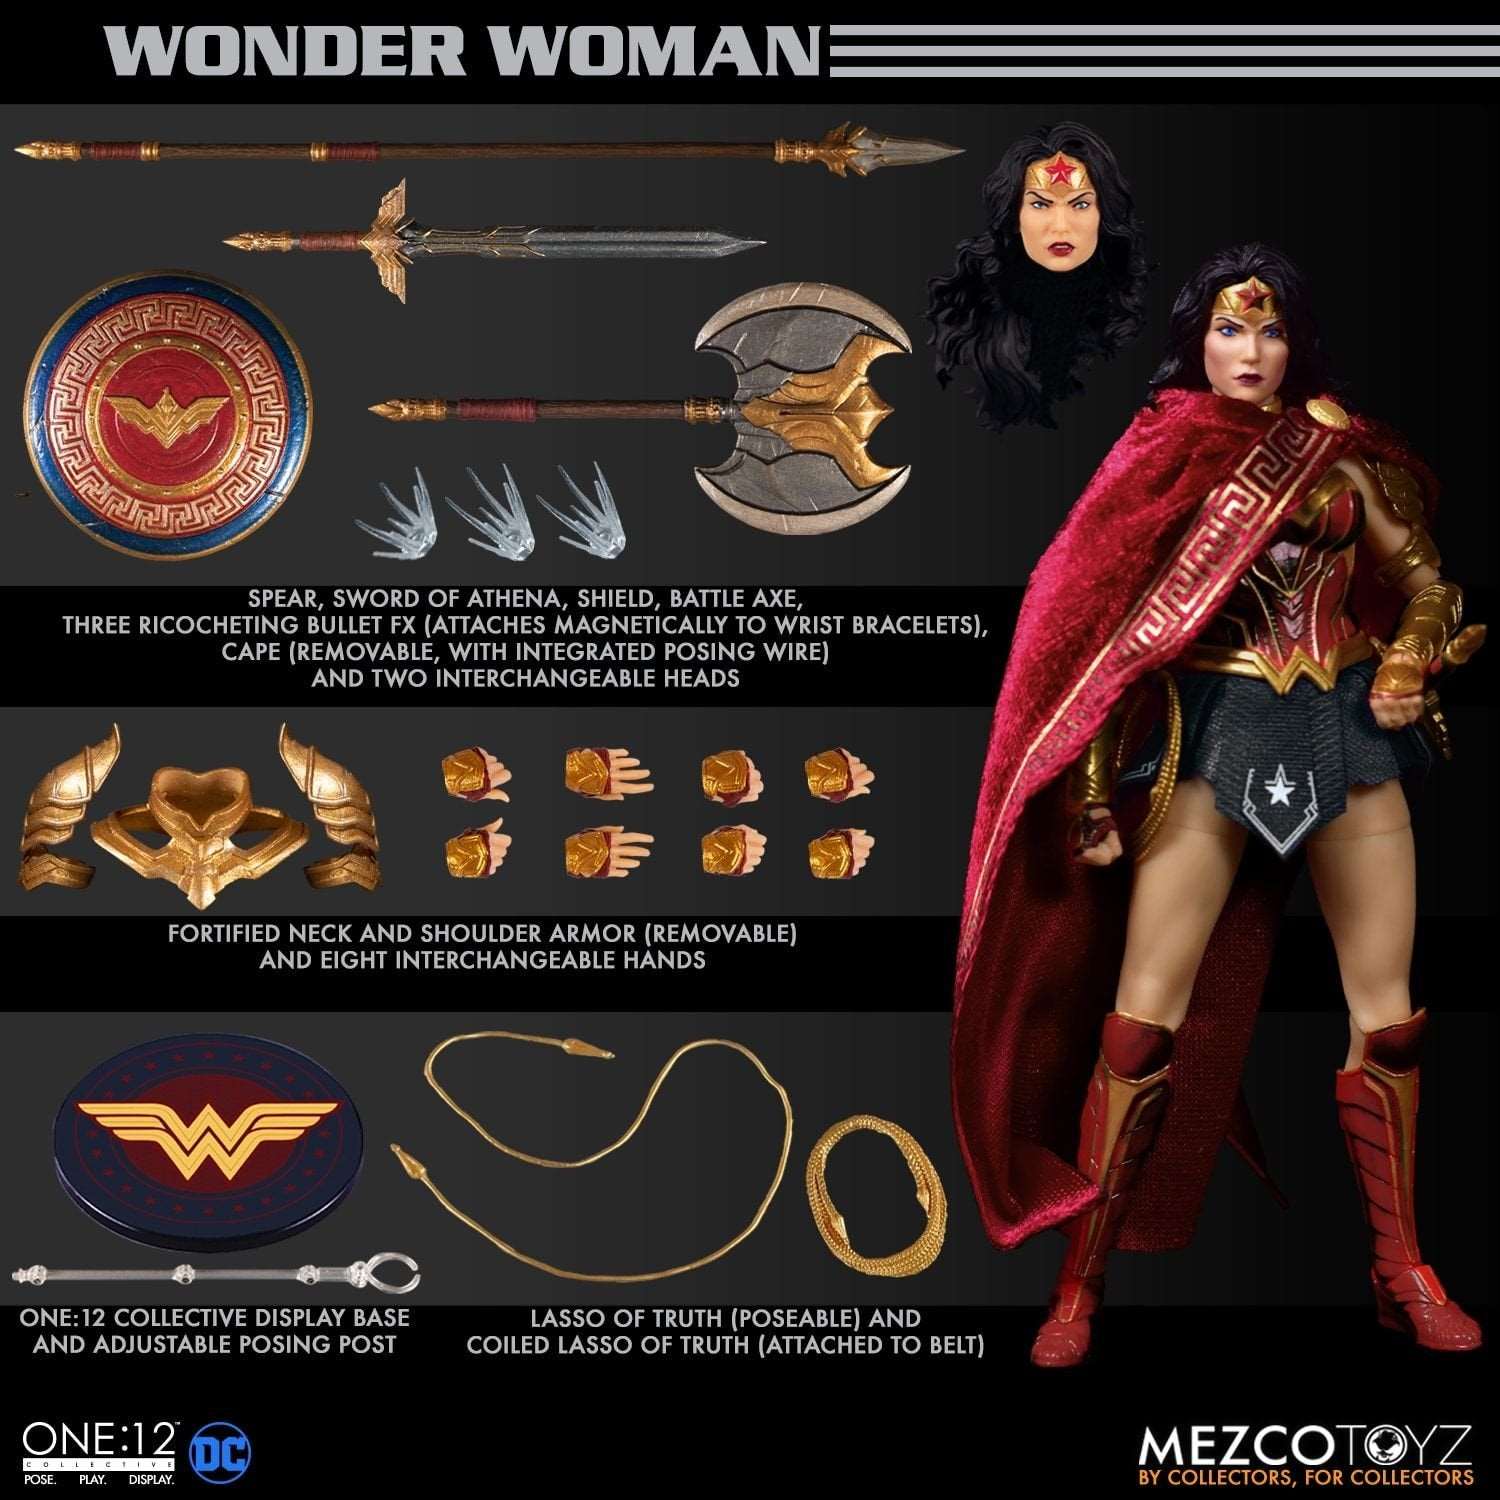 Mezco One:12 DC Universe Wonder Woman figure and accessories